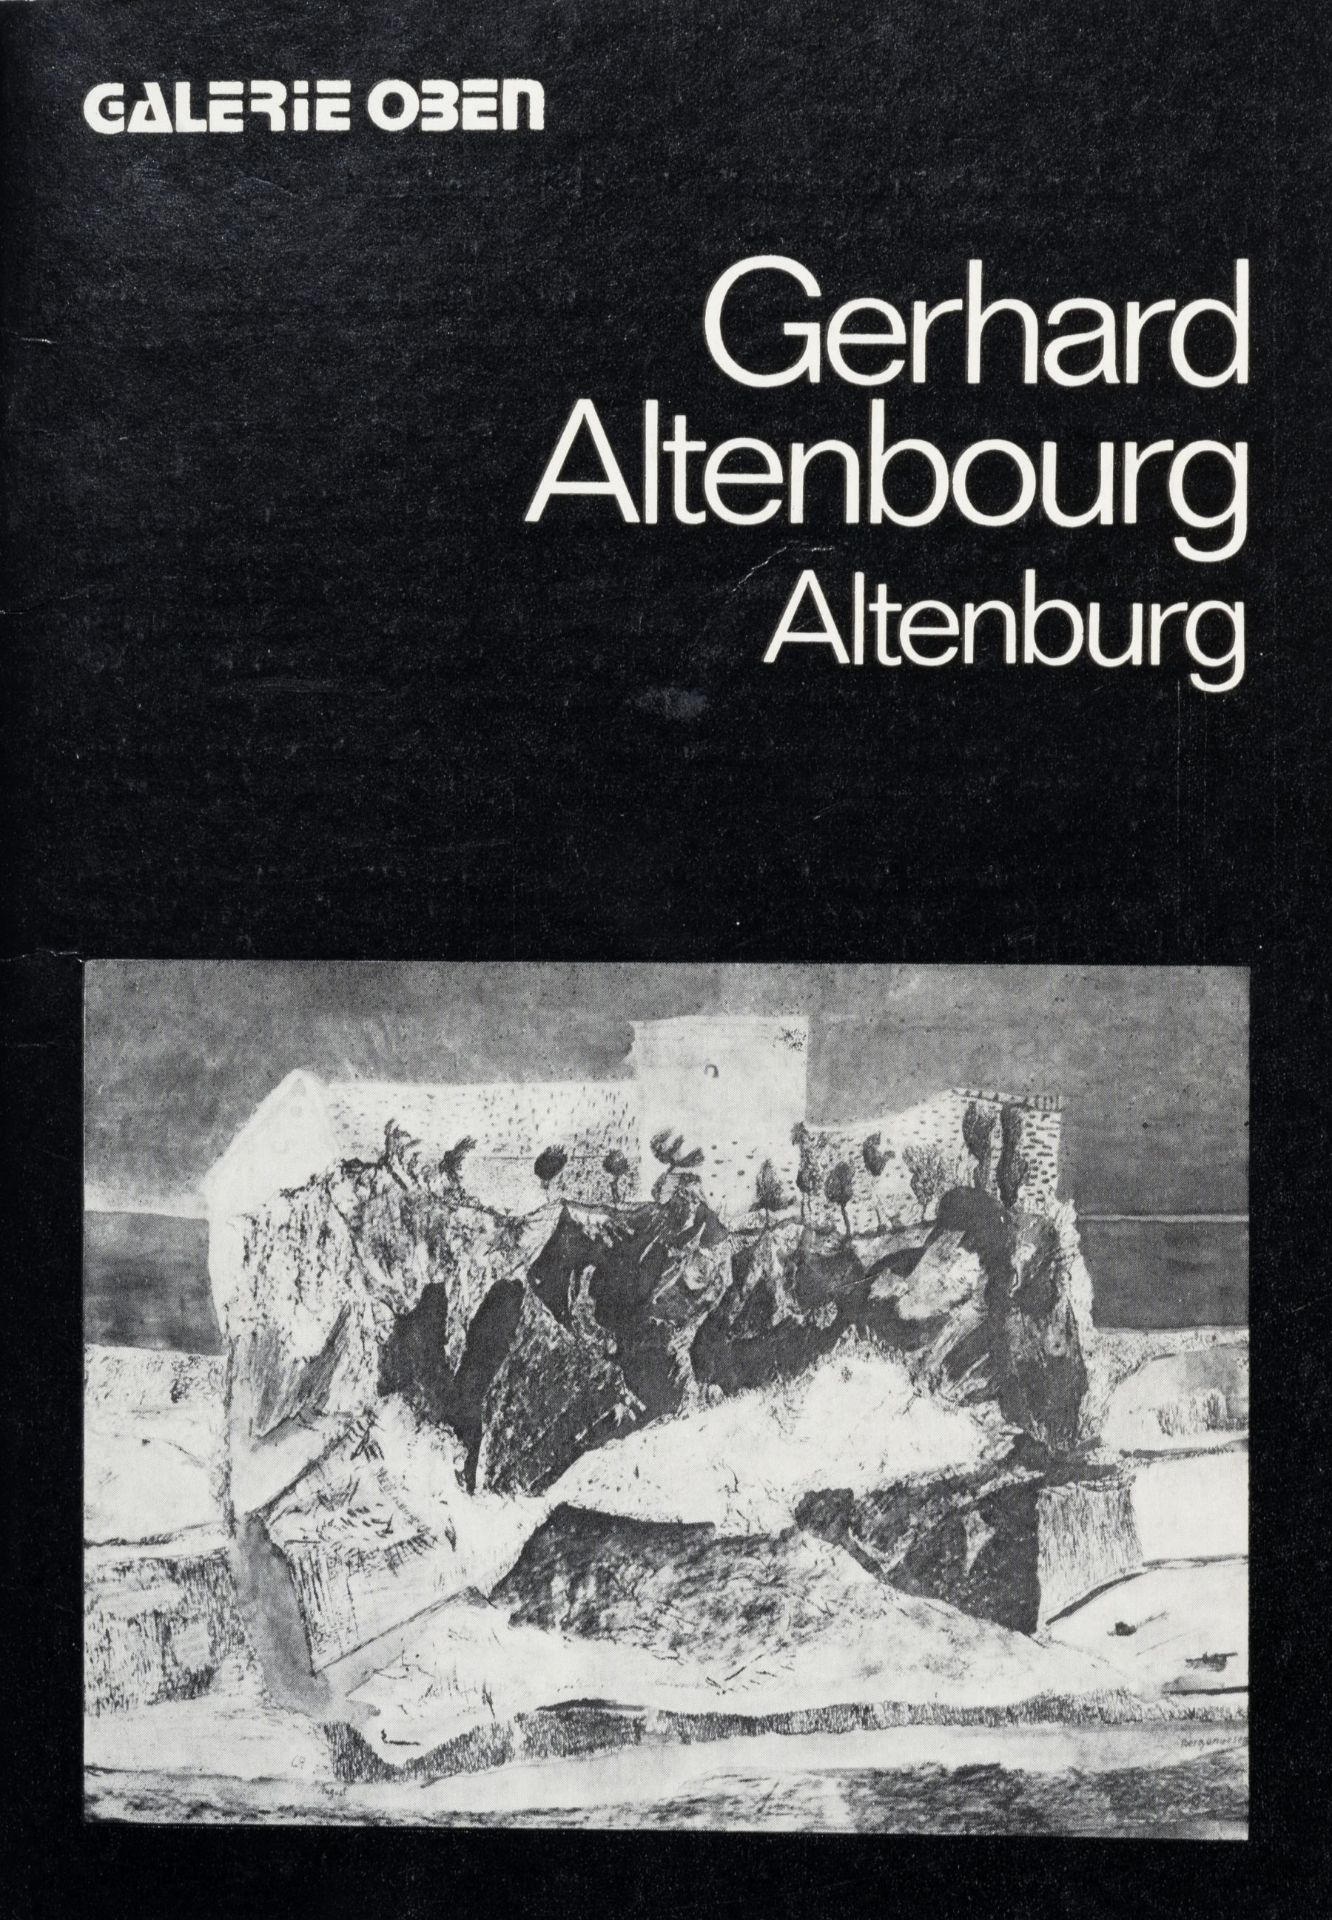 Gerhard Altenbourg "das milde i. IM MOOS-GEBIET". 1981. - Image 2 of 2